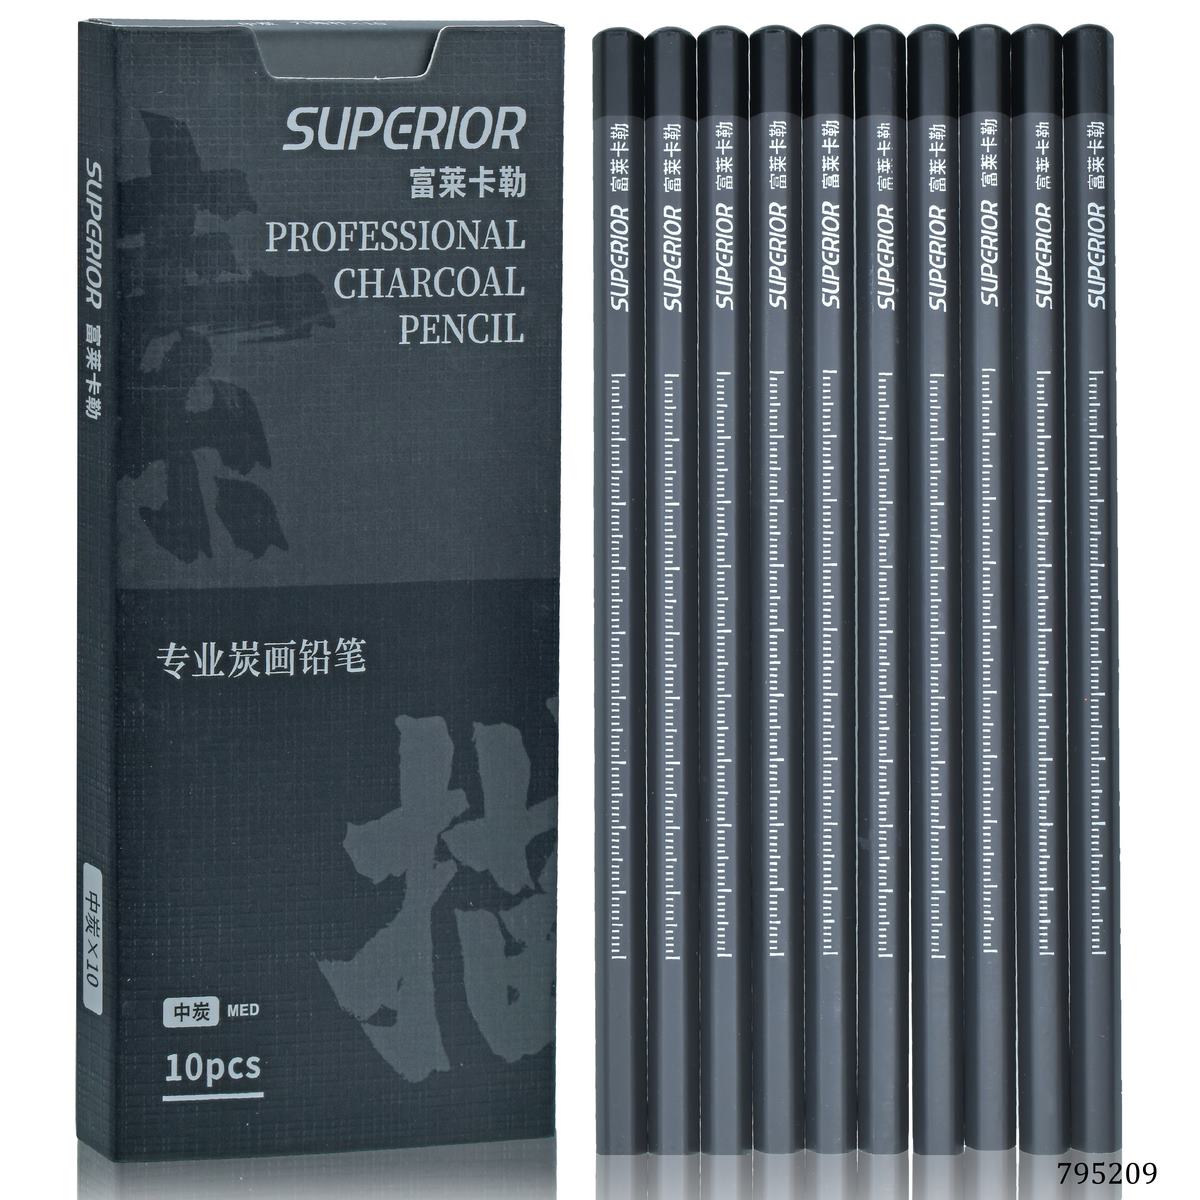 jags-mumbai Pencil Superior Profesional Chorcoal Pencil 10Pcs Med 795209